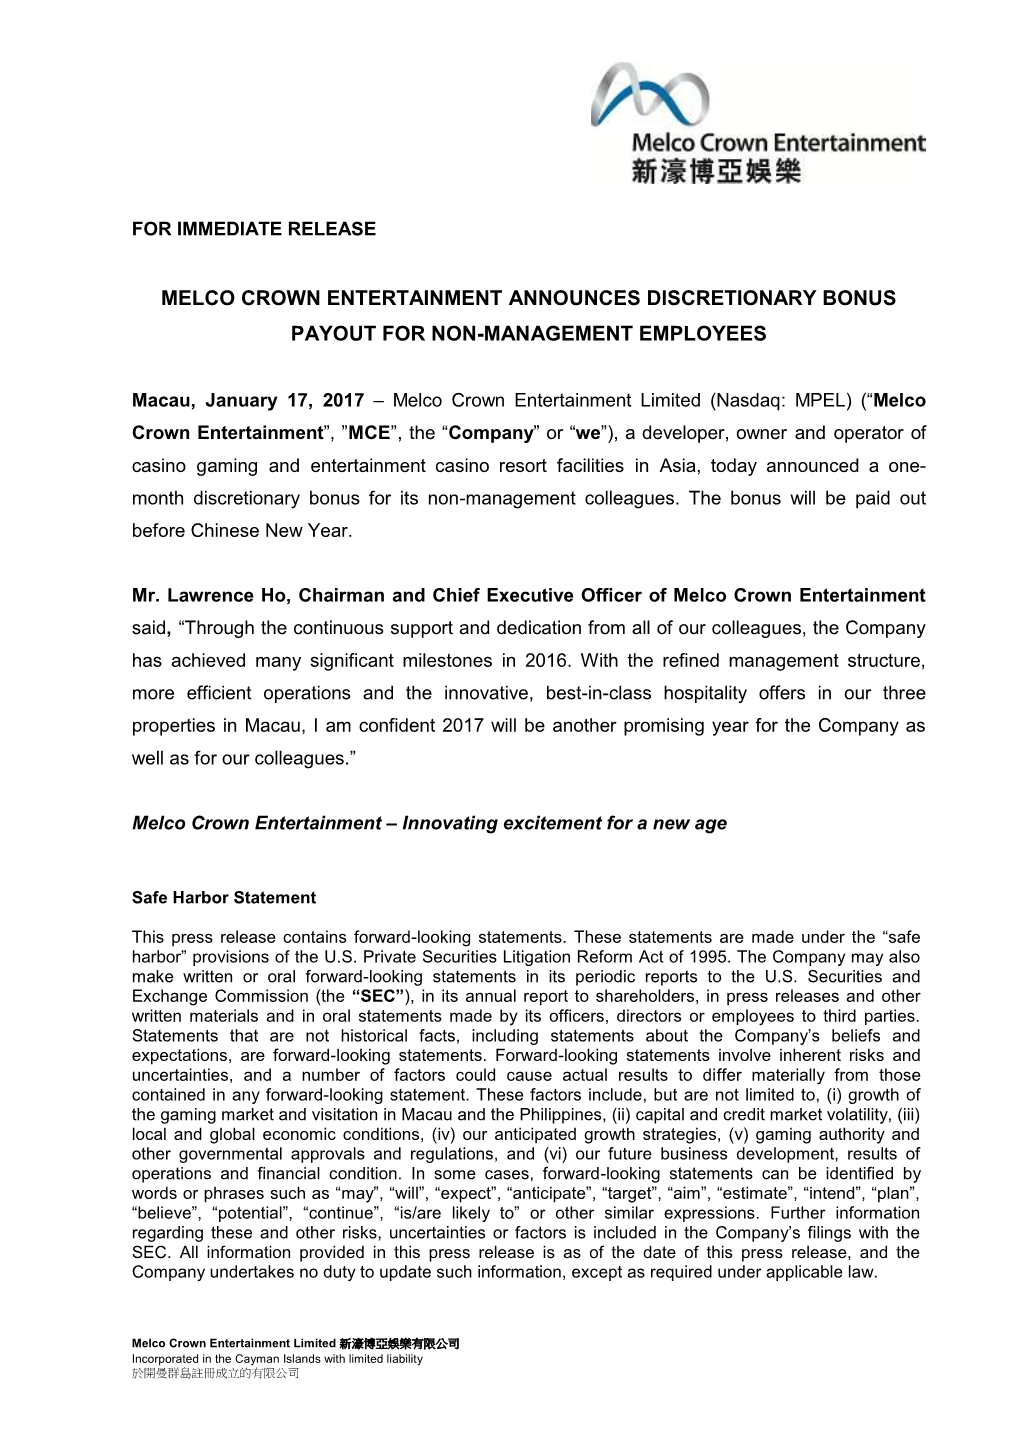 Melco Crown Entertainment Announces Discretionary Bonus Payout for Non-Management Employees